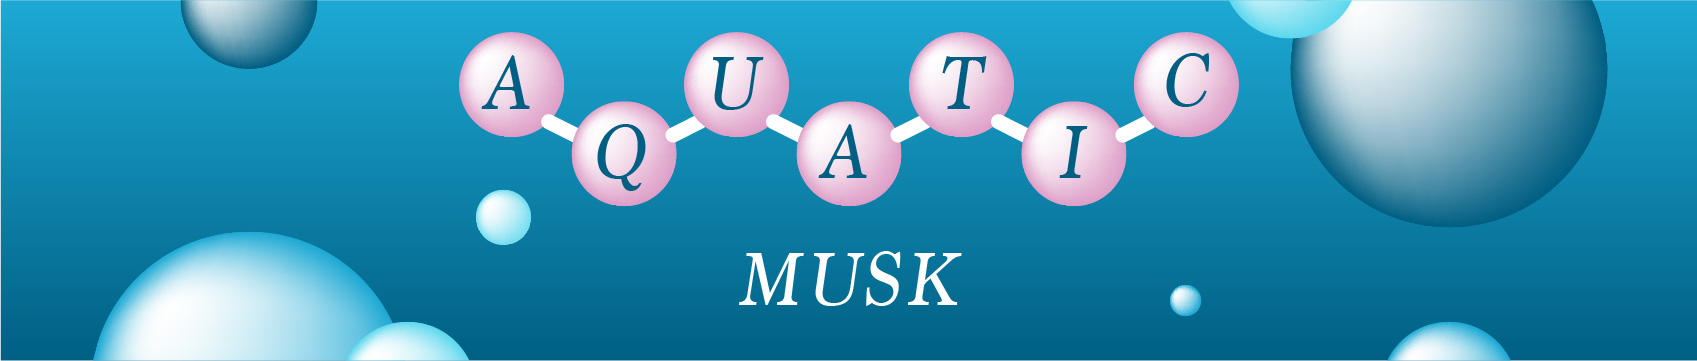 illustration of molecules aquatic musk